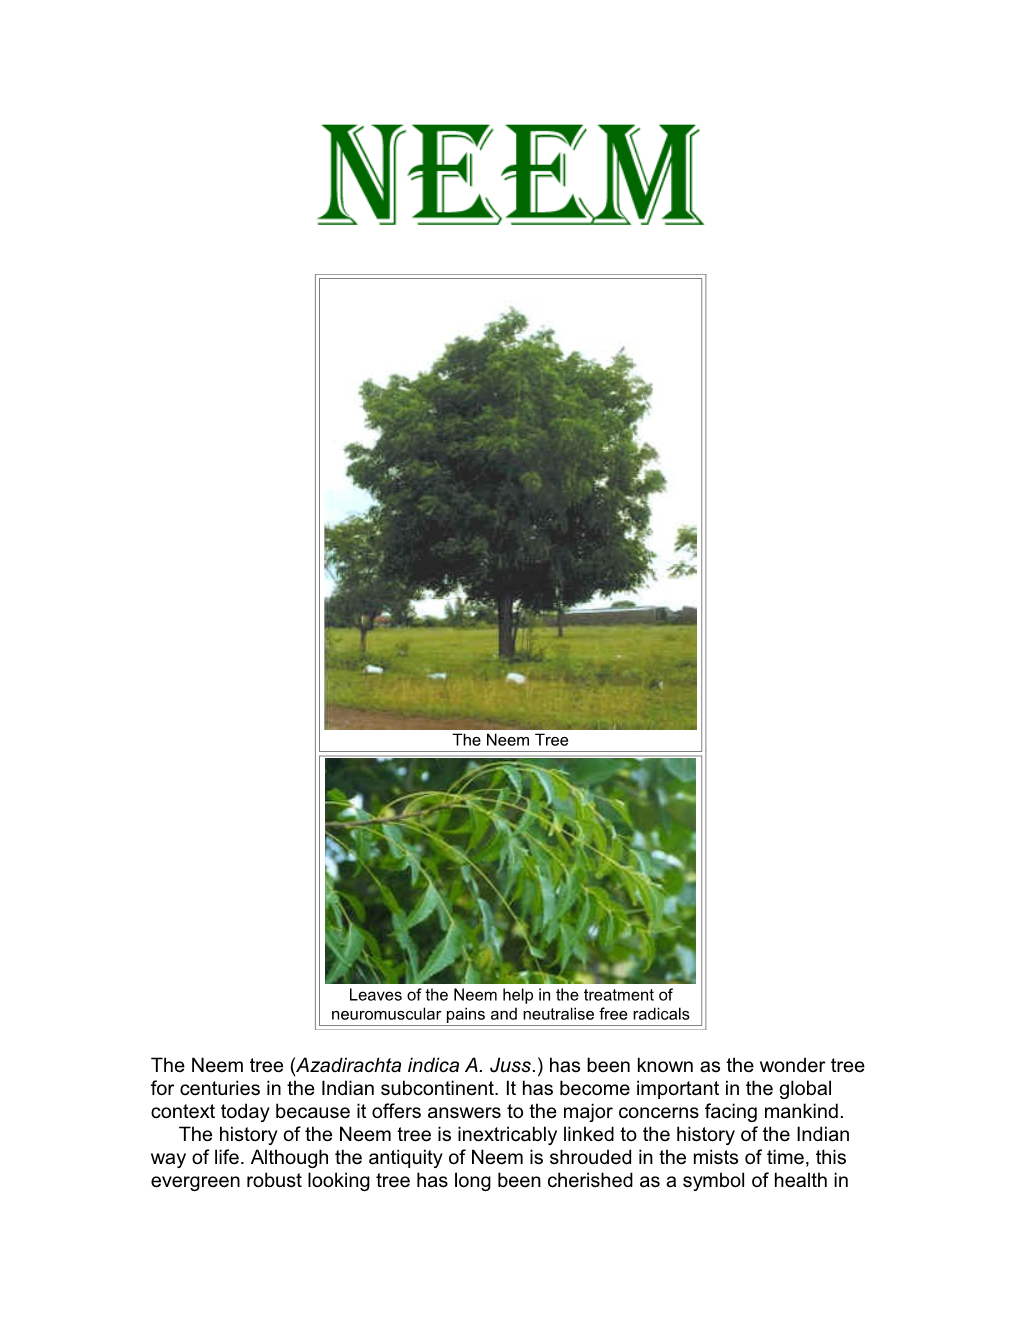 The Neem Tree (Azadirachta Indica A